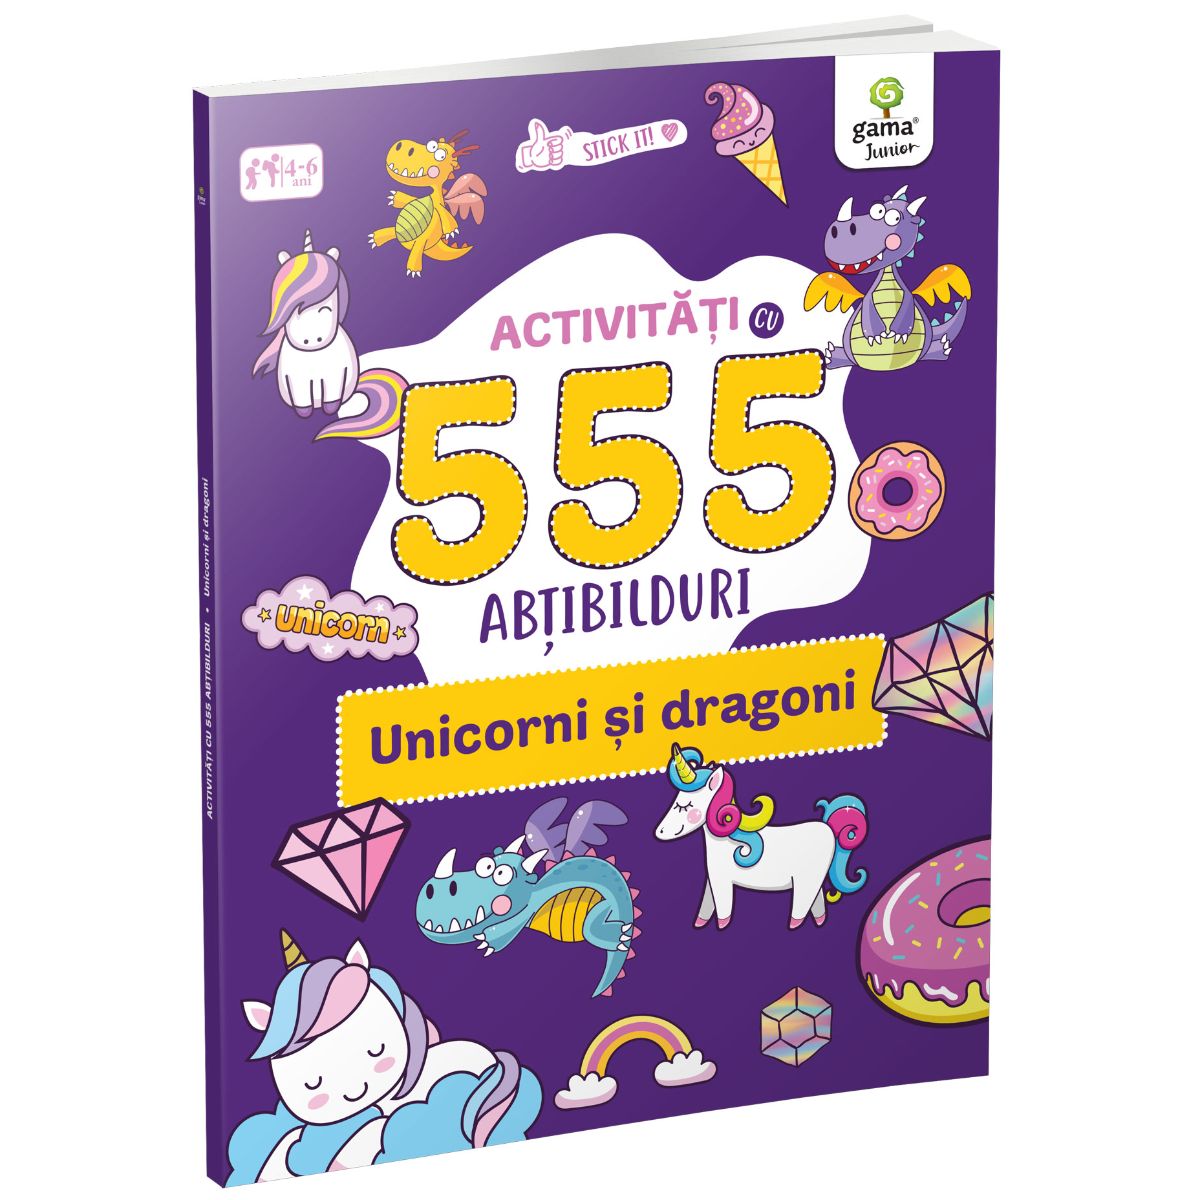 Unicorni si dragoni. Activitati cu 555 abtibilduri, Stick it!